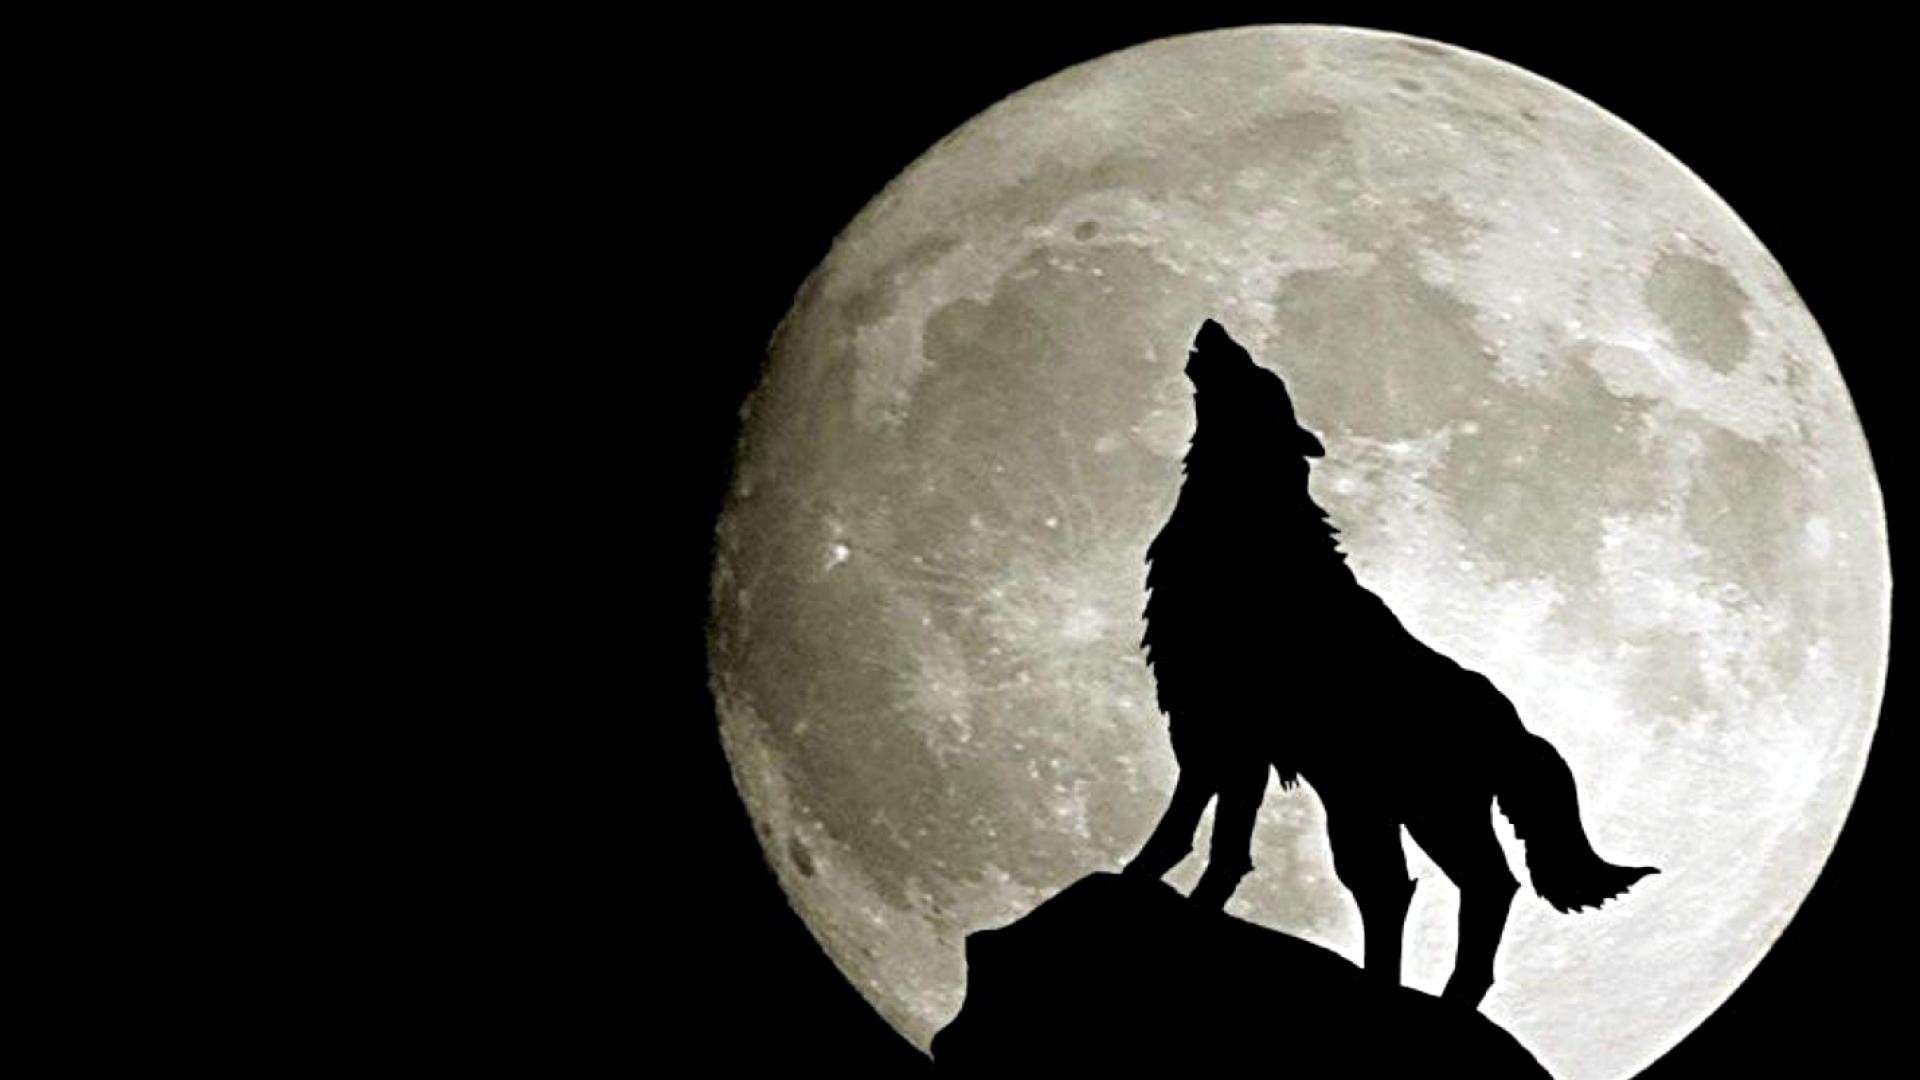 Wolf Full Moon Wallpaper 1080p HiWallpapercom 5 5 1 votes